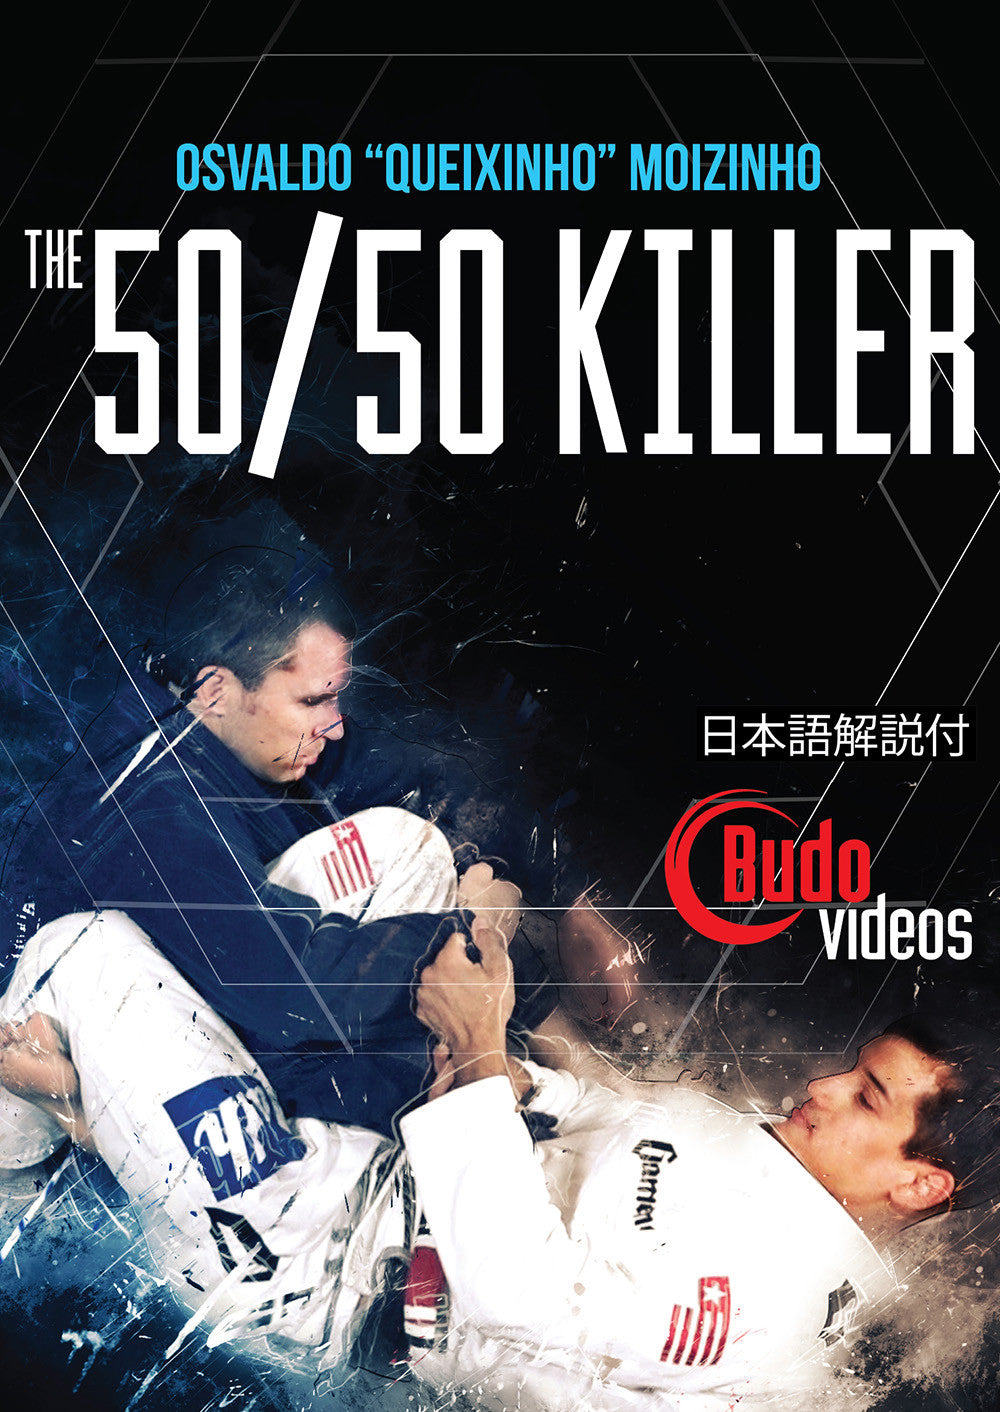 50 50 Killer DVD or Blu-ray by Osvaldo Queixinho Moizinho - Budovideos Inc